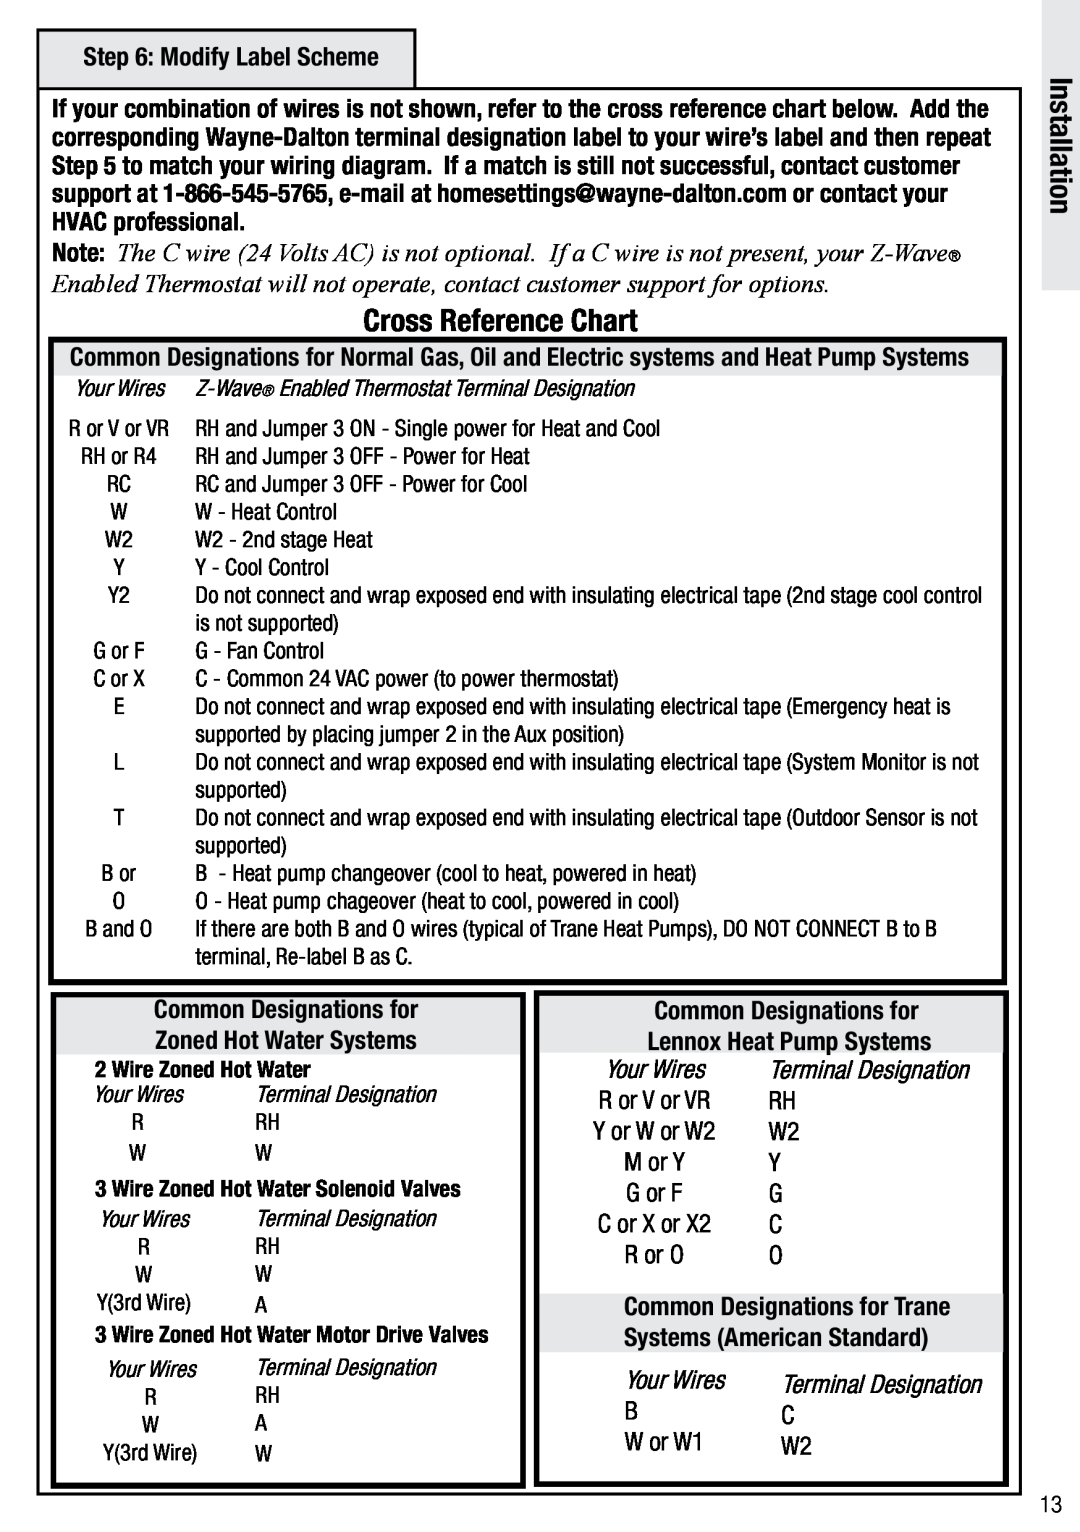 Wayne-Dalton WDTC-20 user manual Cross Reference Chart, Installation, Modify Label Scheme, Your Wires, W or W1 